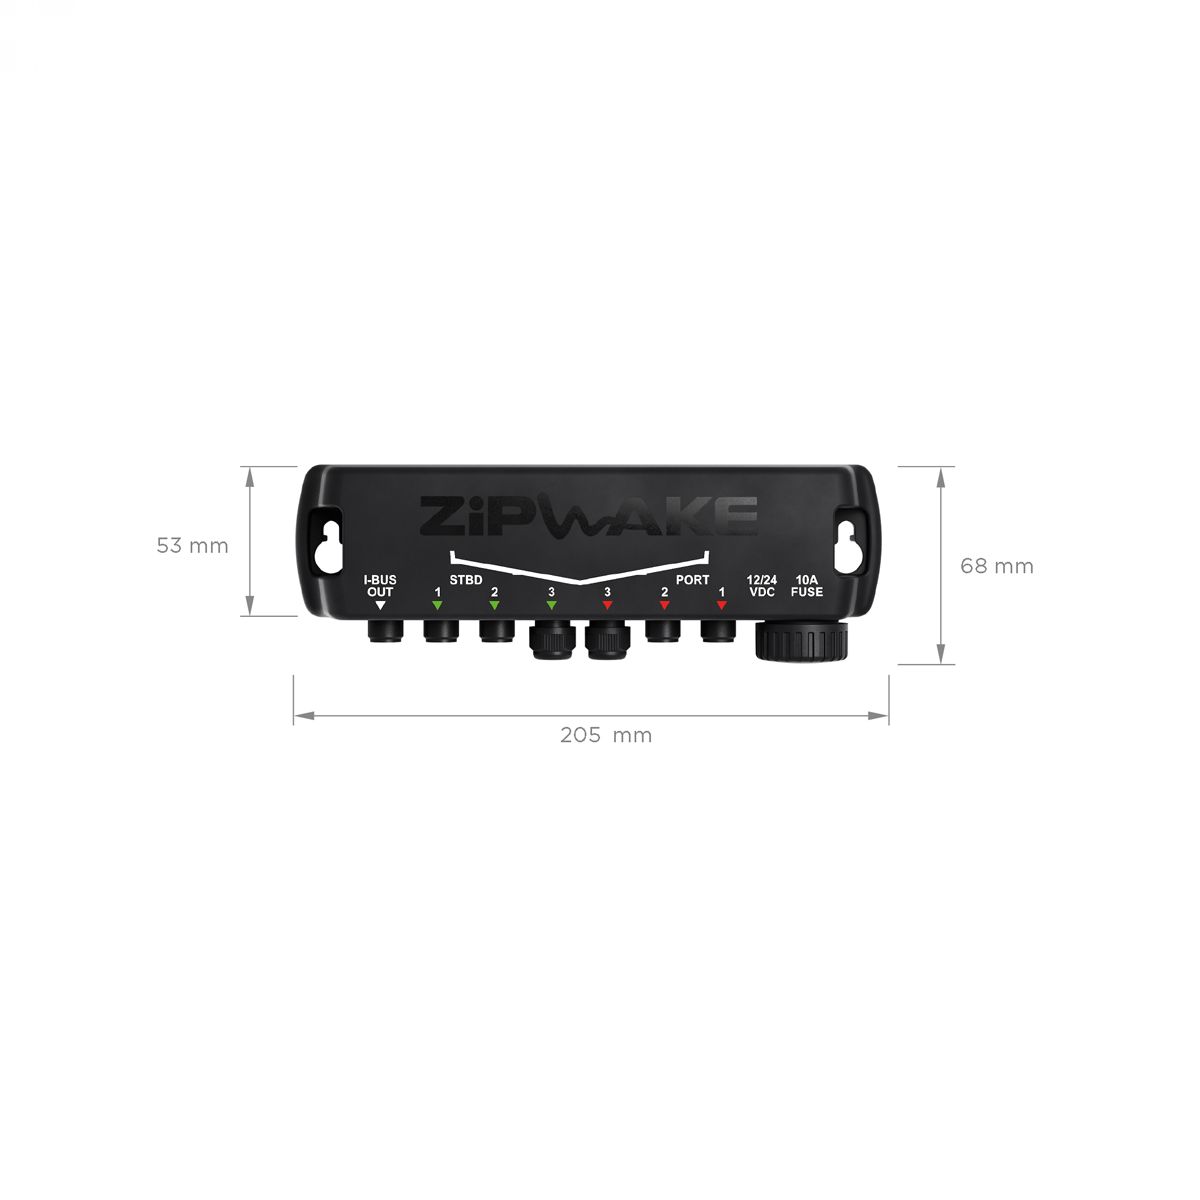 Zipwake KB450S Chine Interceptor Box Kit, dynamic trim control